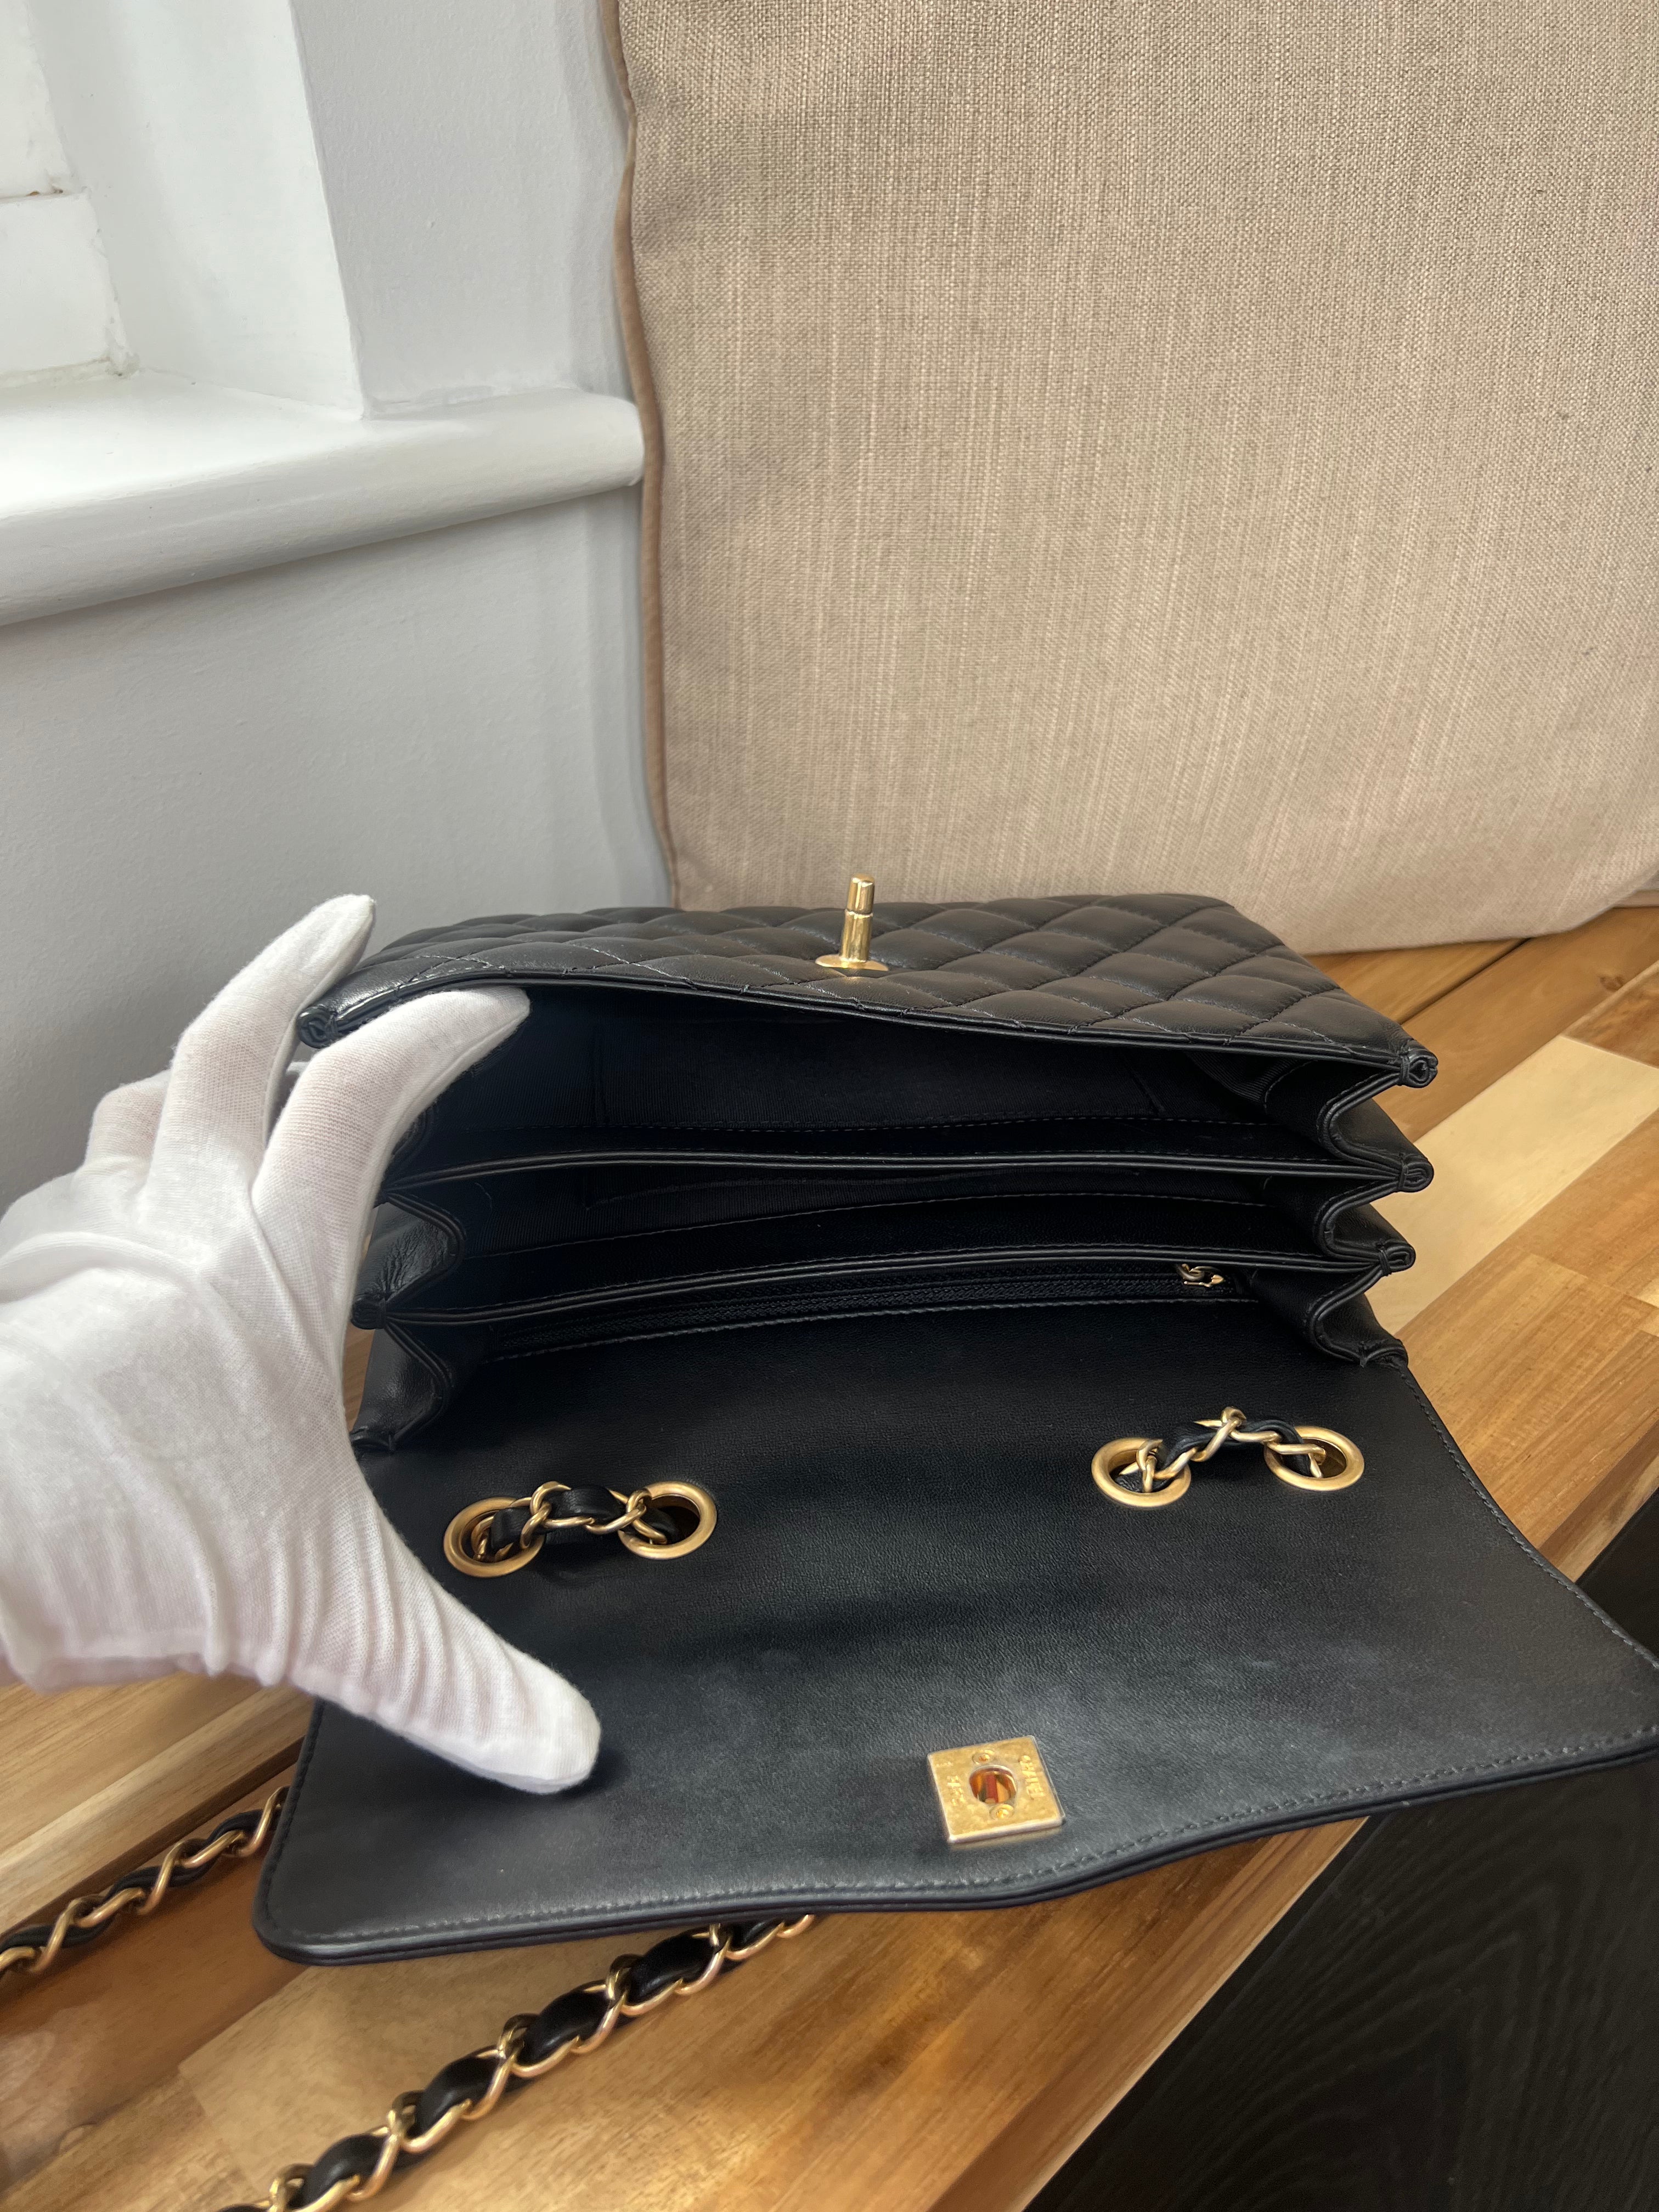 Chanel Black Flap Bag